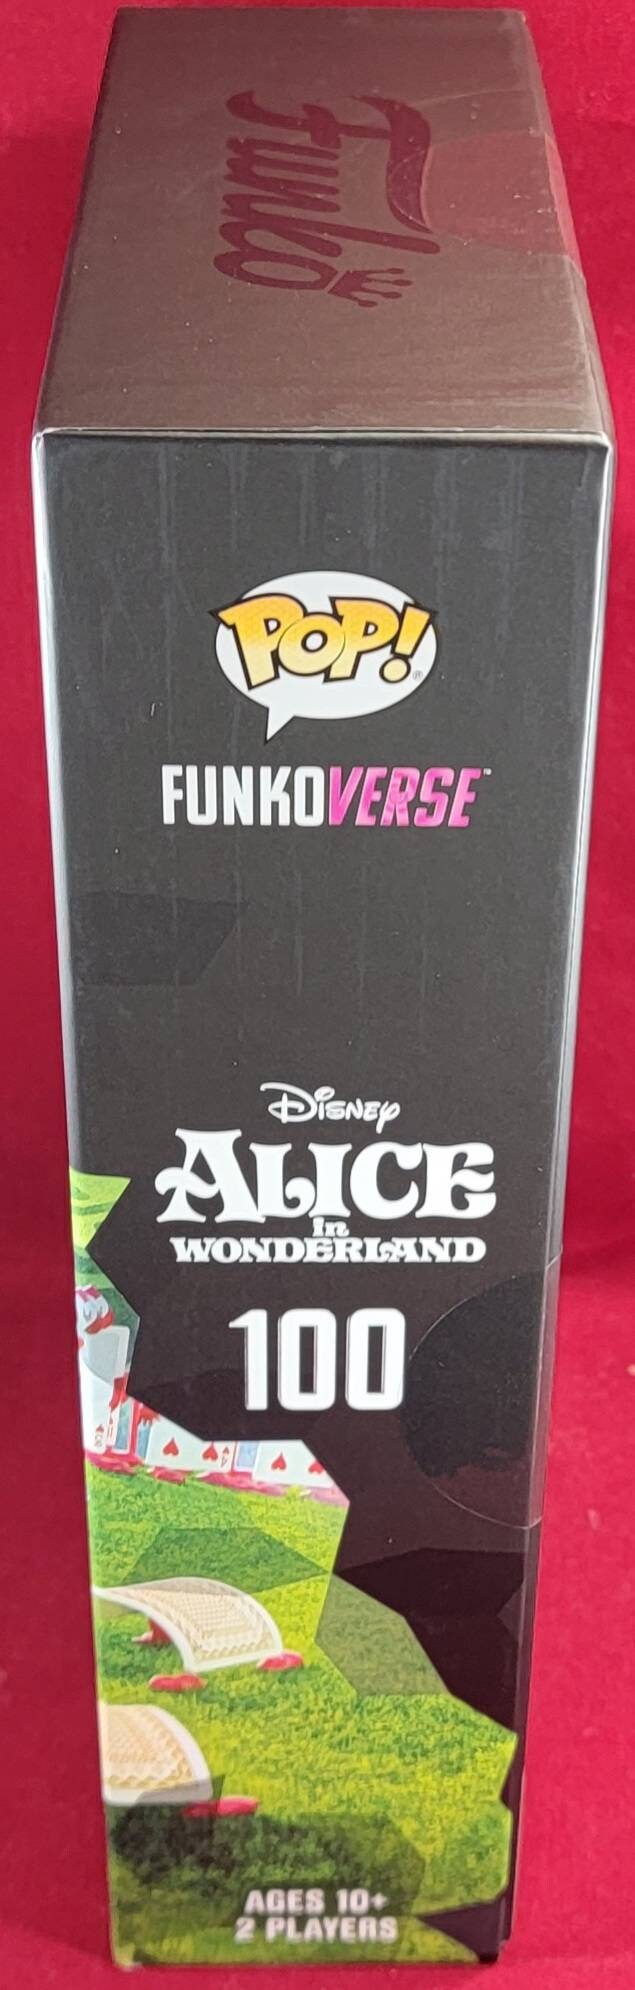 Alice in wonderland Chase funko verse strategy game NIB